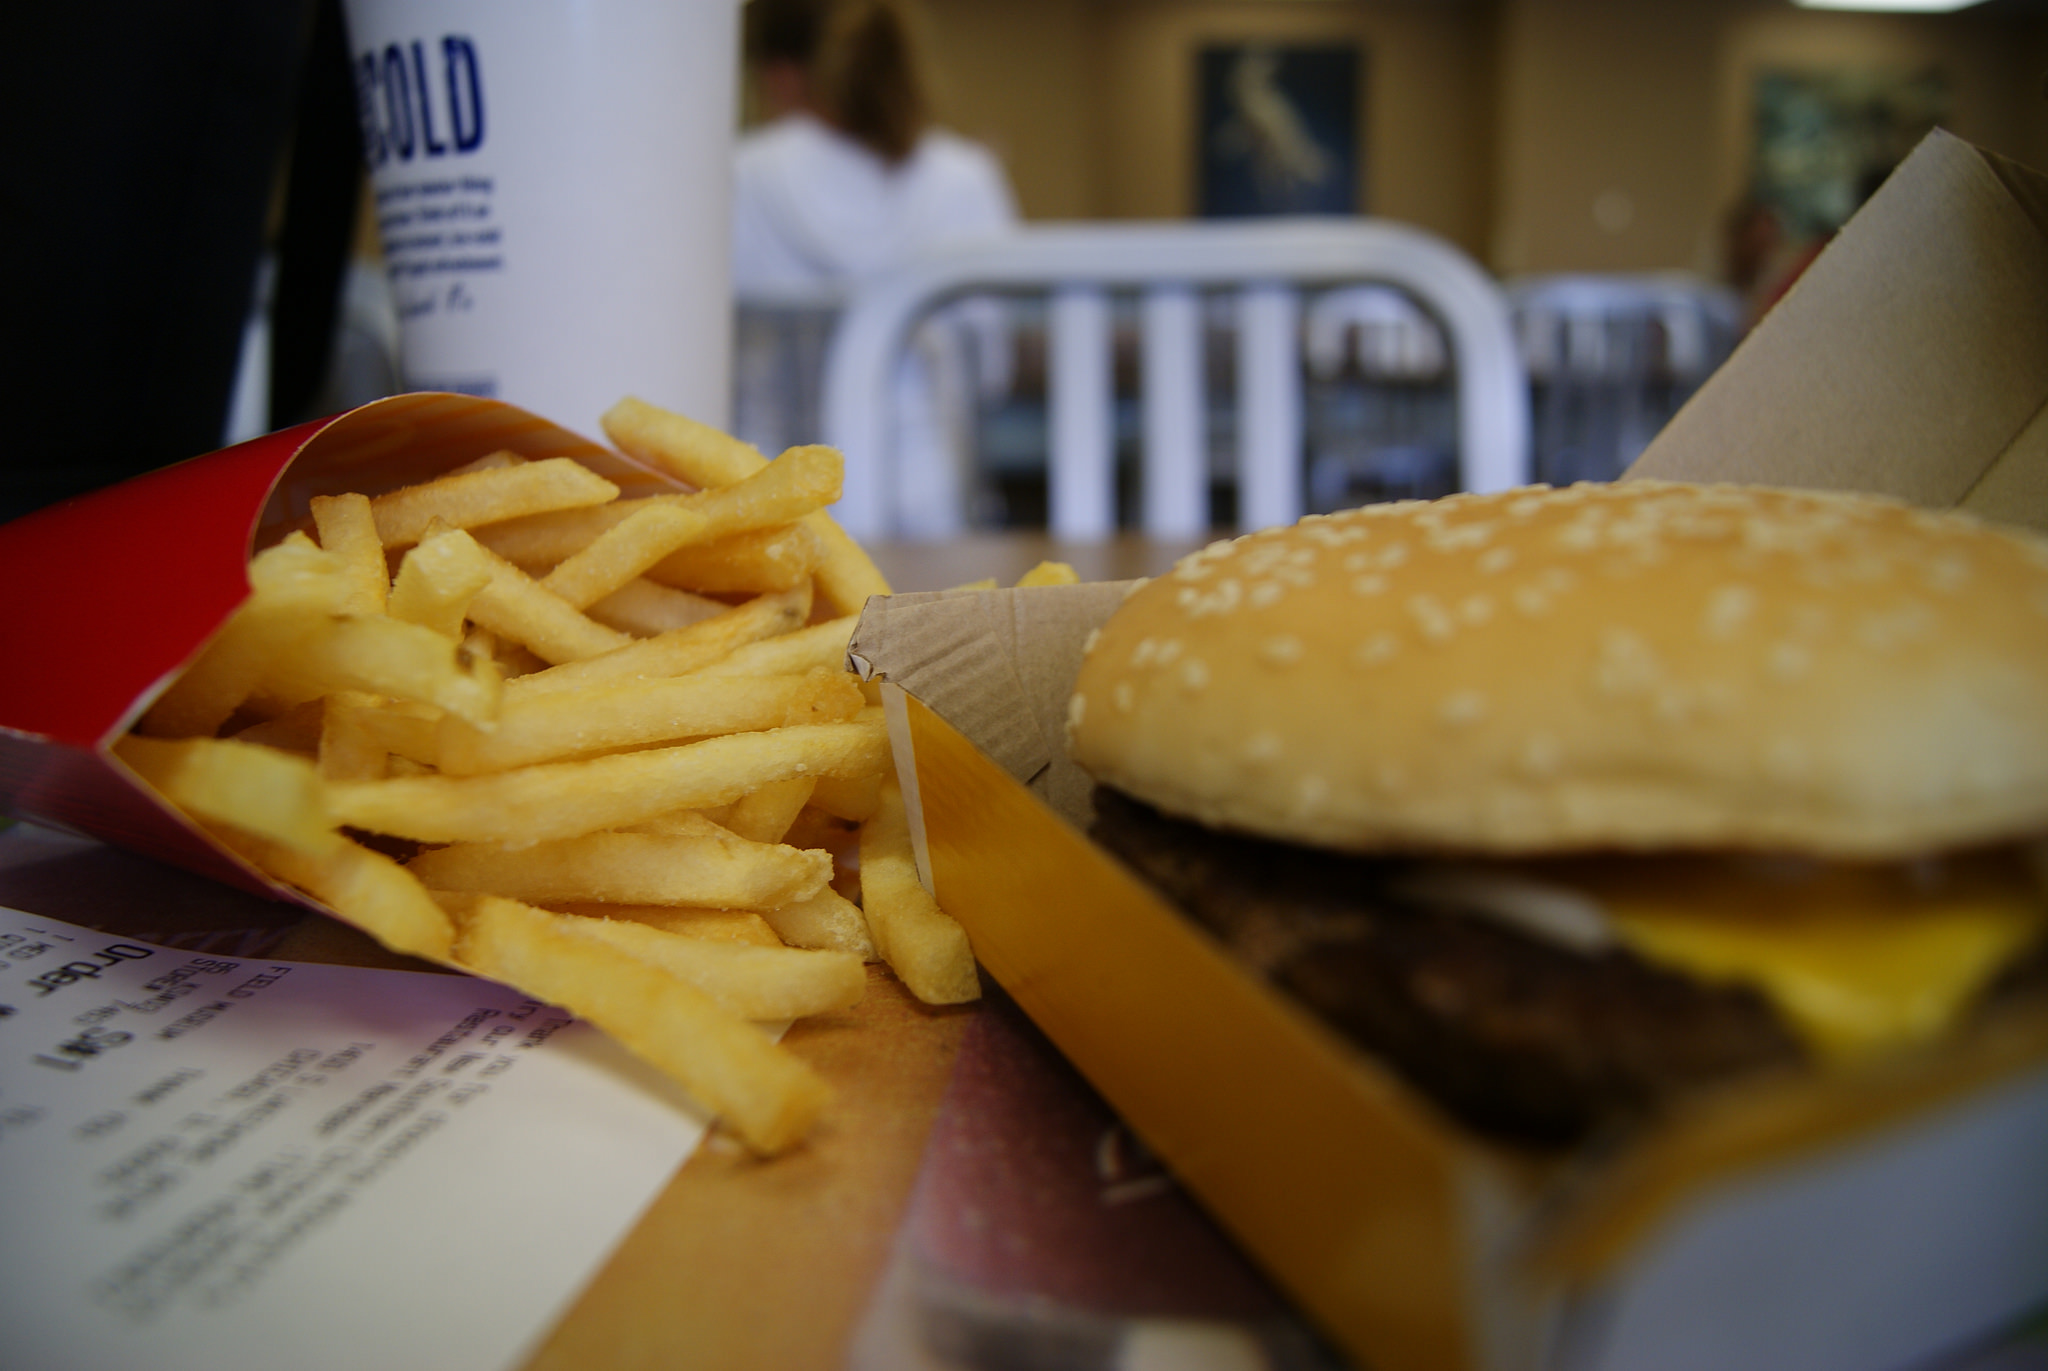 McDonald's Quarter Pounder burger and fries.